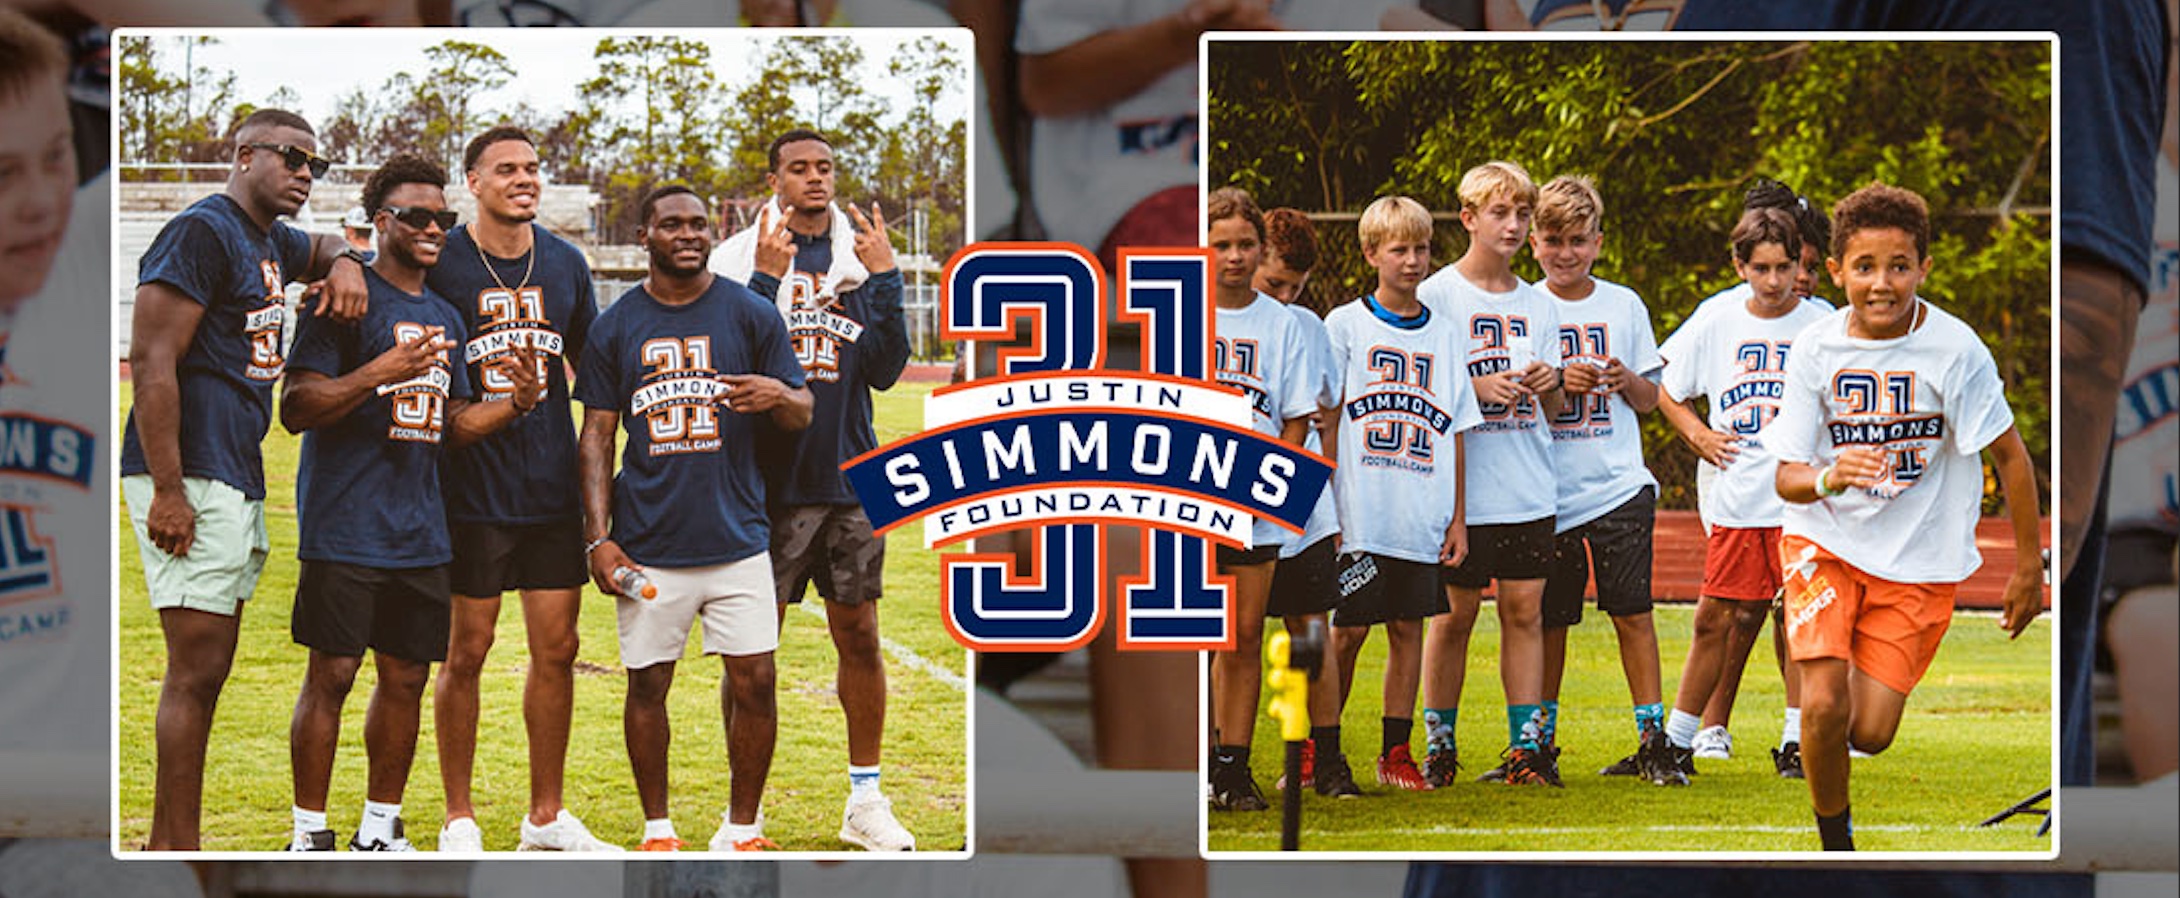 Justin Simmons FREE Florida Youth Football Camp